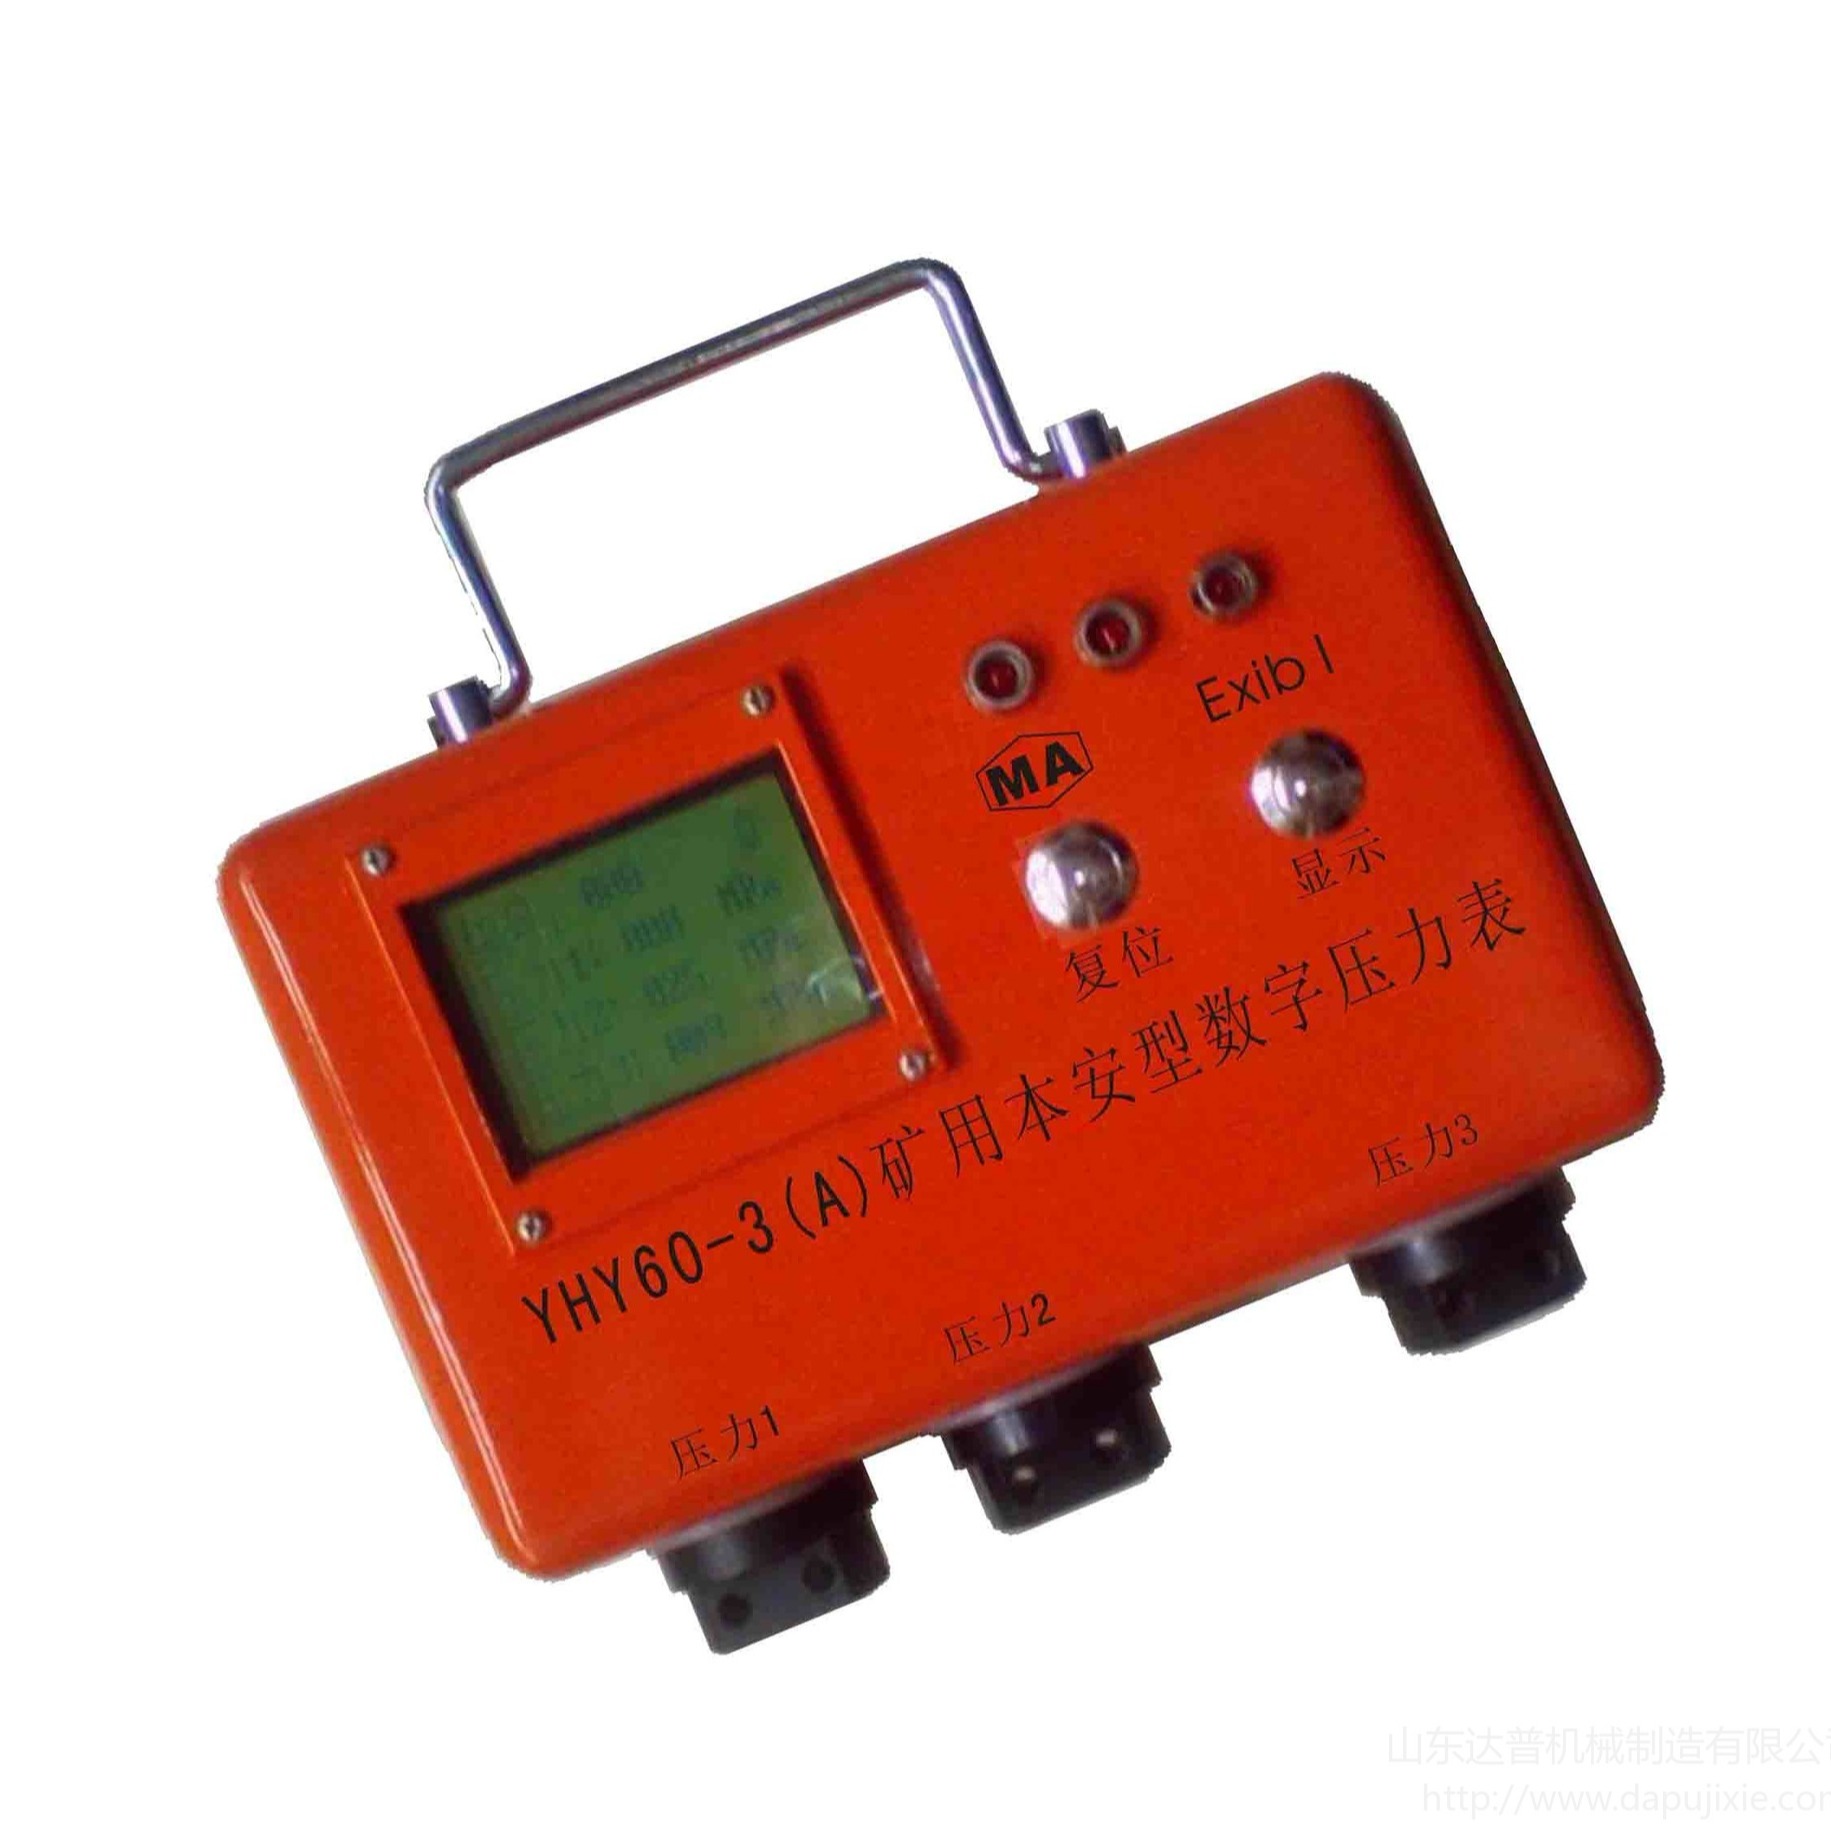 YHY60-3A矿用本安型数字压力表 能连续自动采集  记录压力值